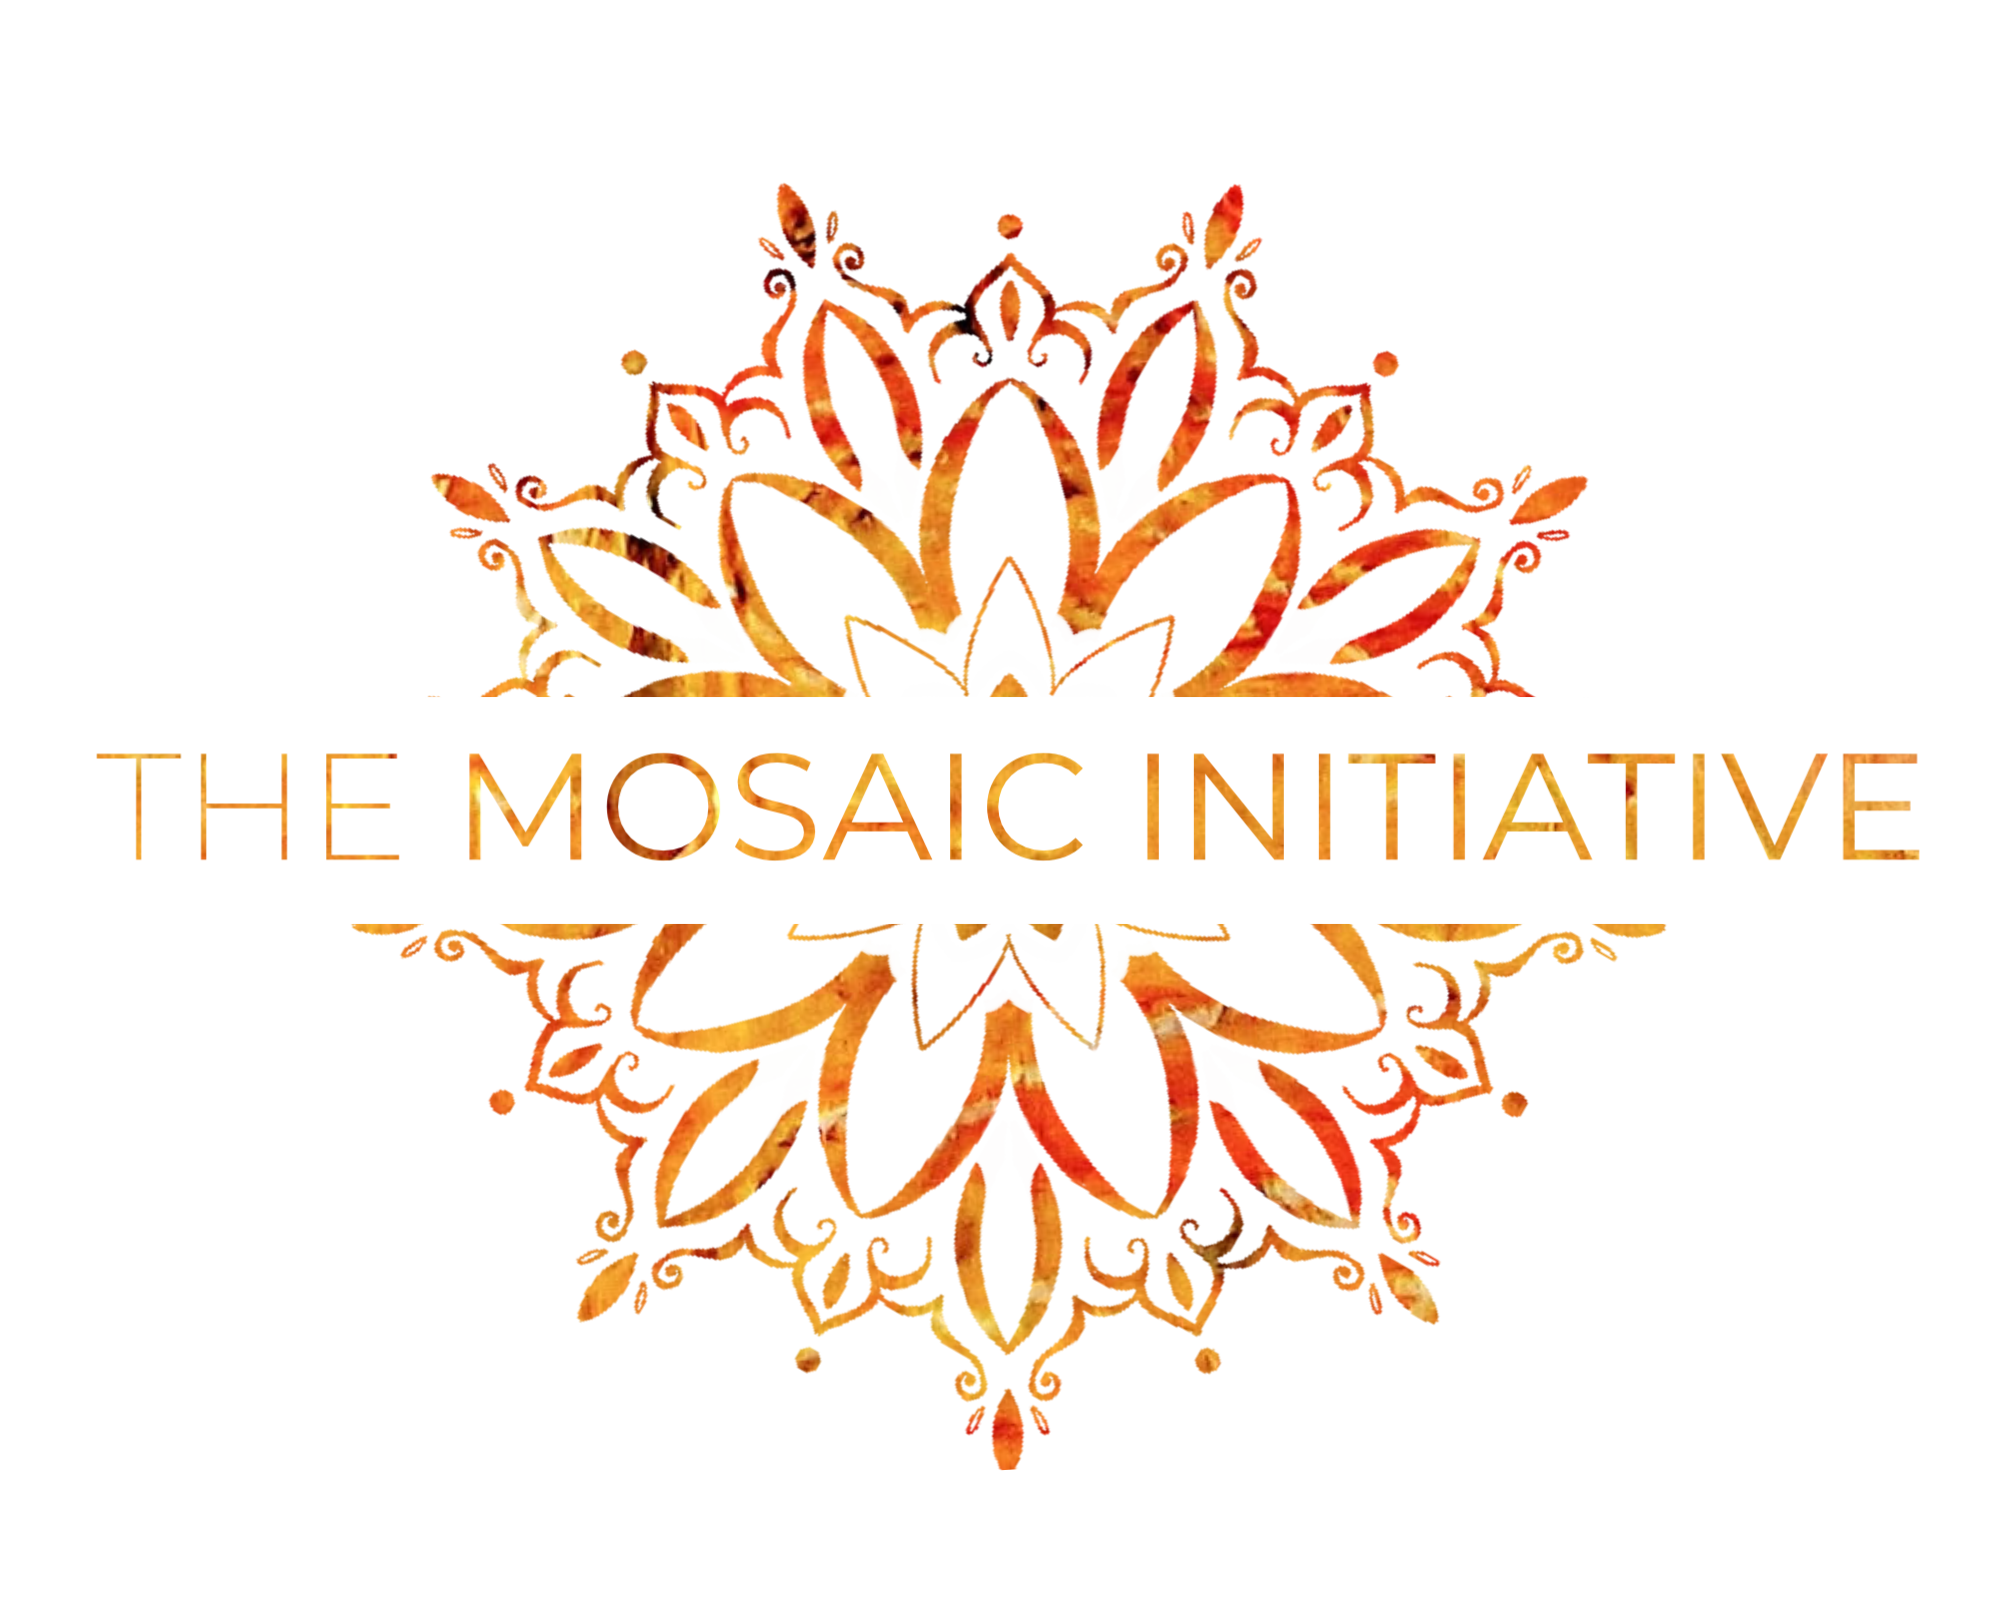 The Mosaic Initiative